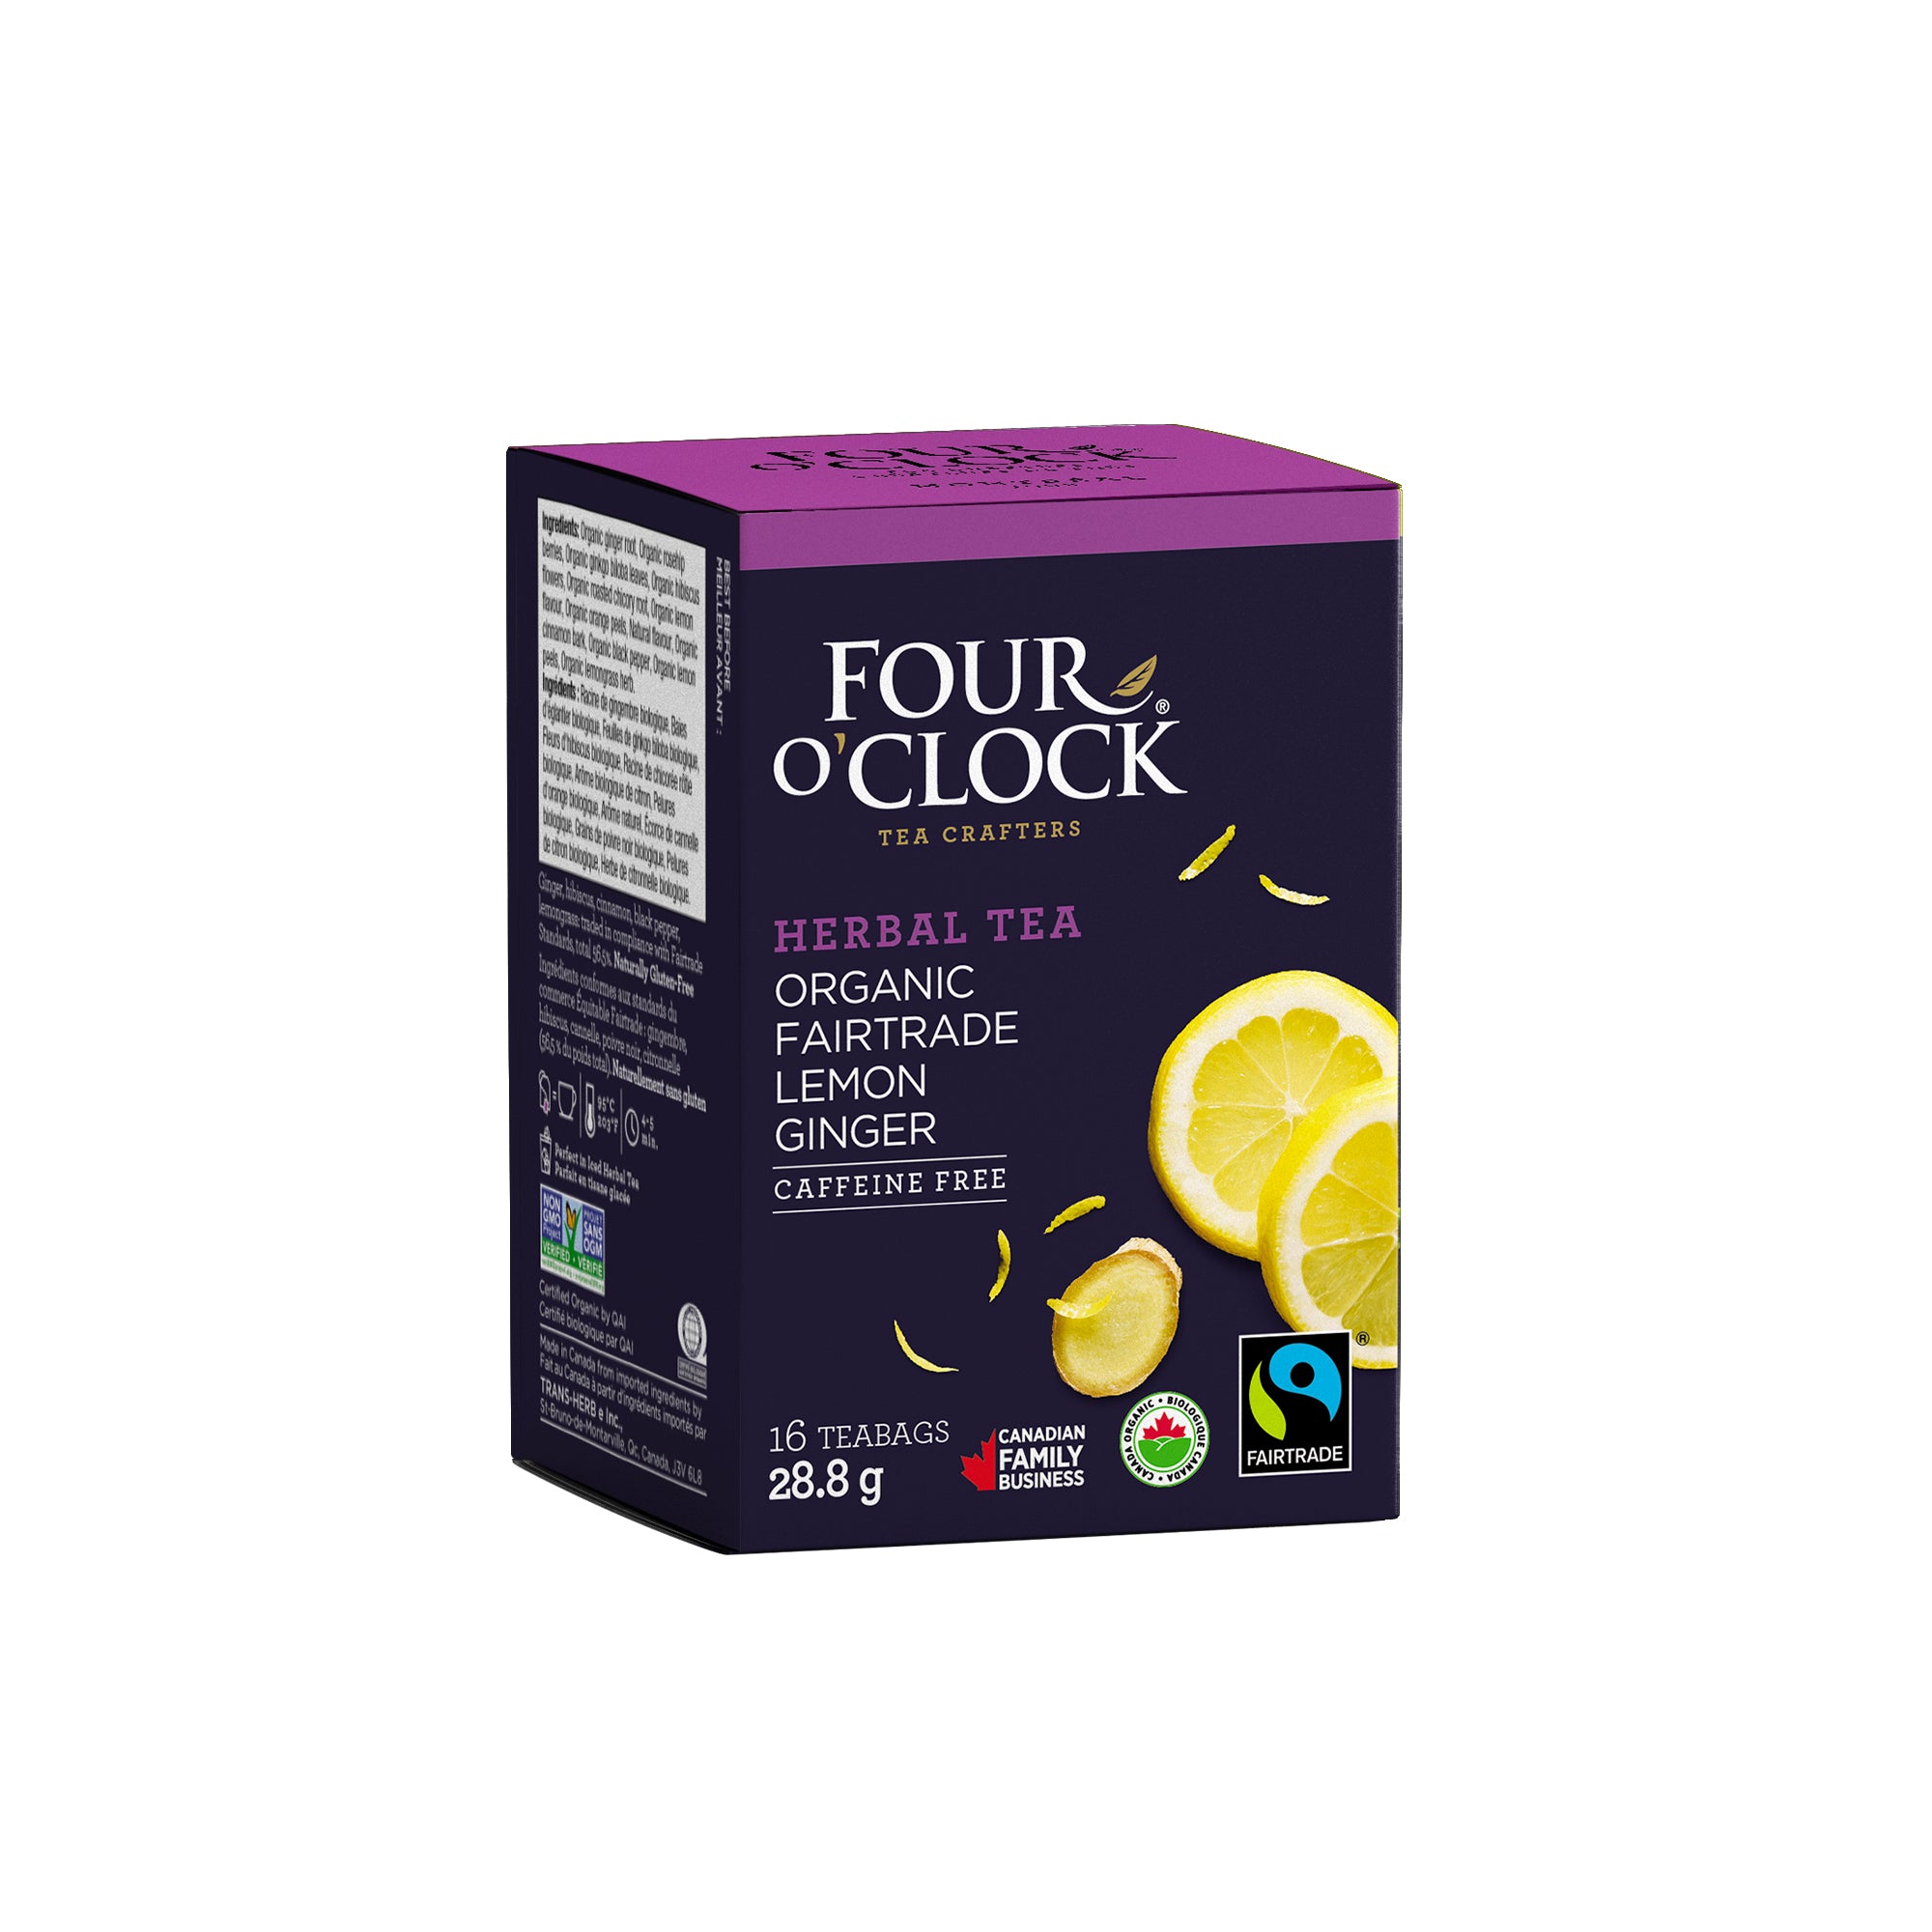 Lemon Ginger Organic Fairtrade Herbal Tea